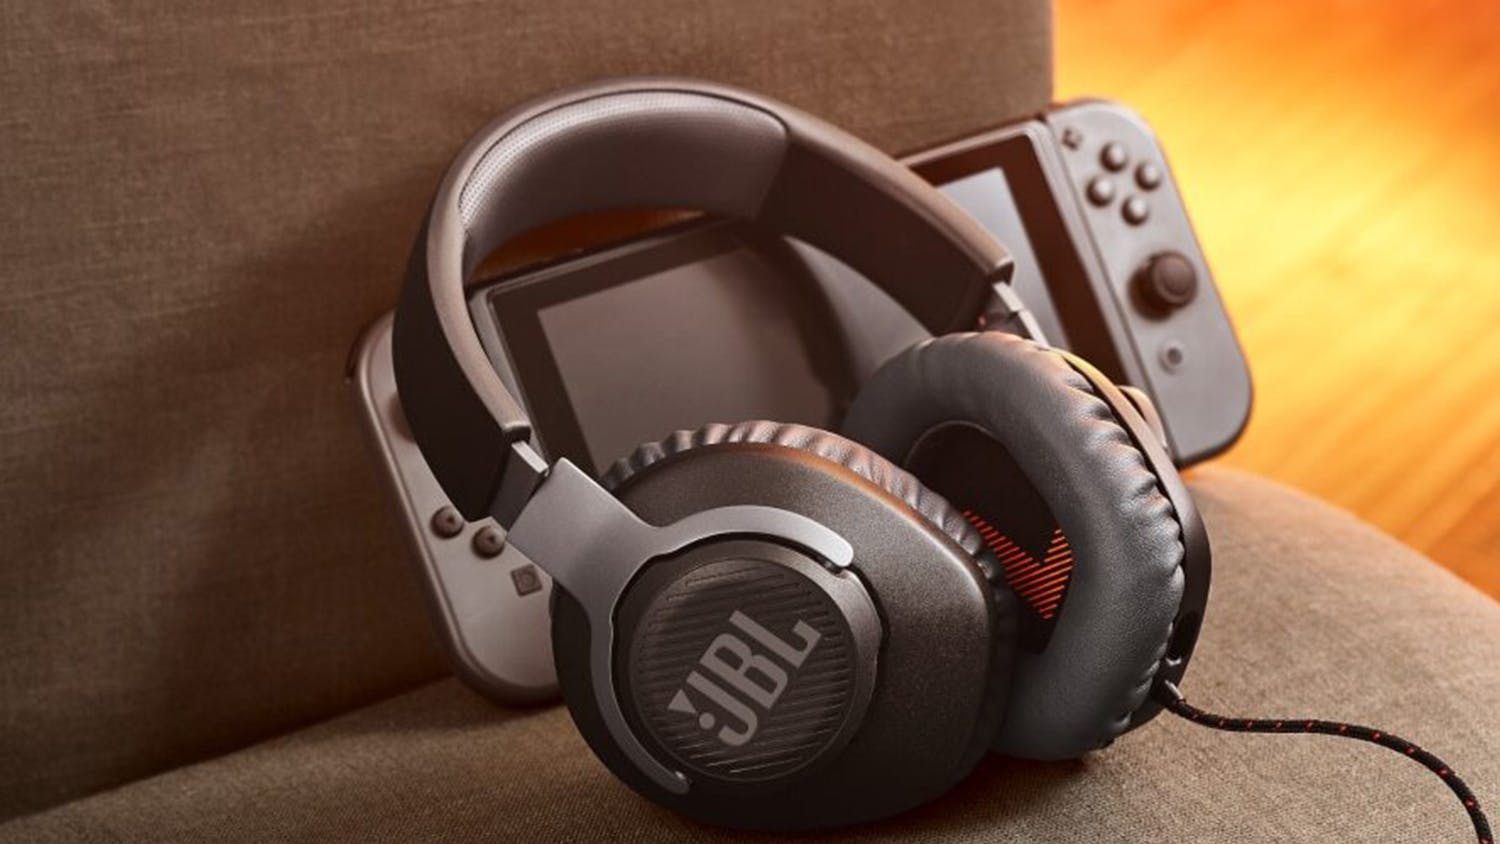 JBL Quantum 100 Over-Ear Gaming Headset - Black